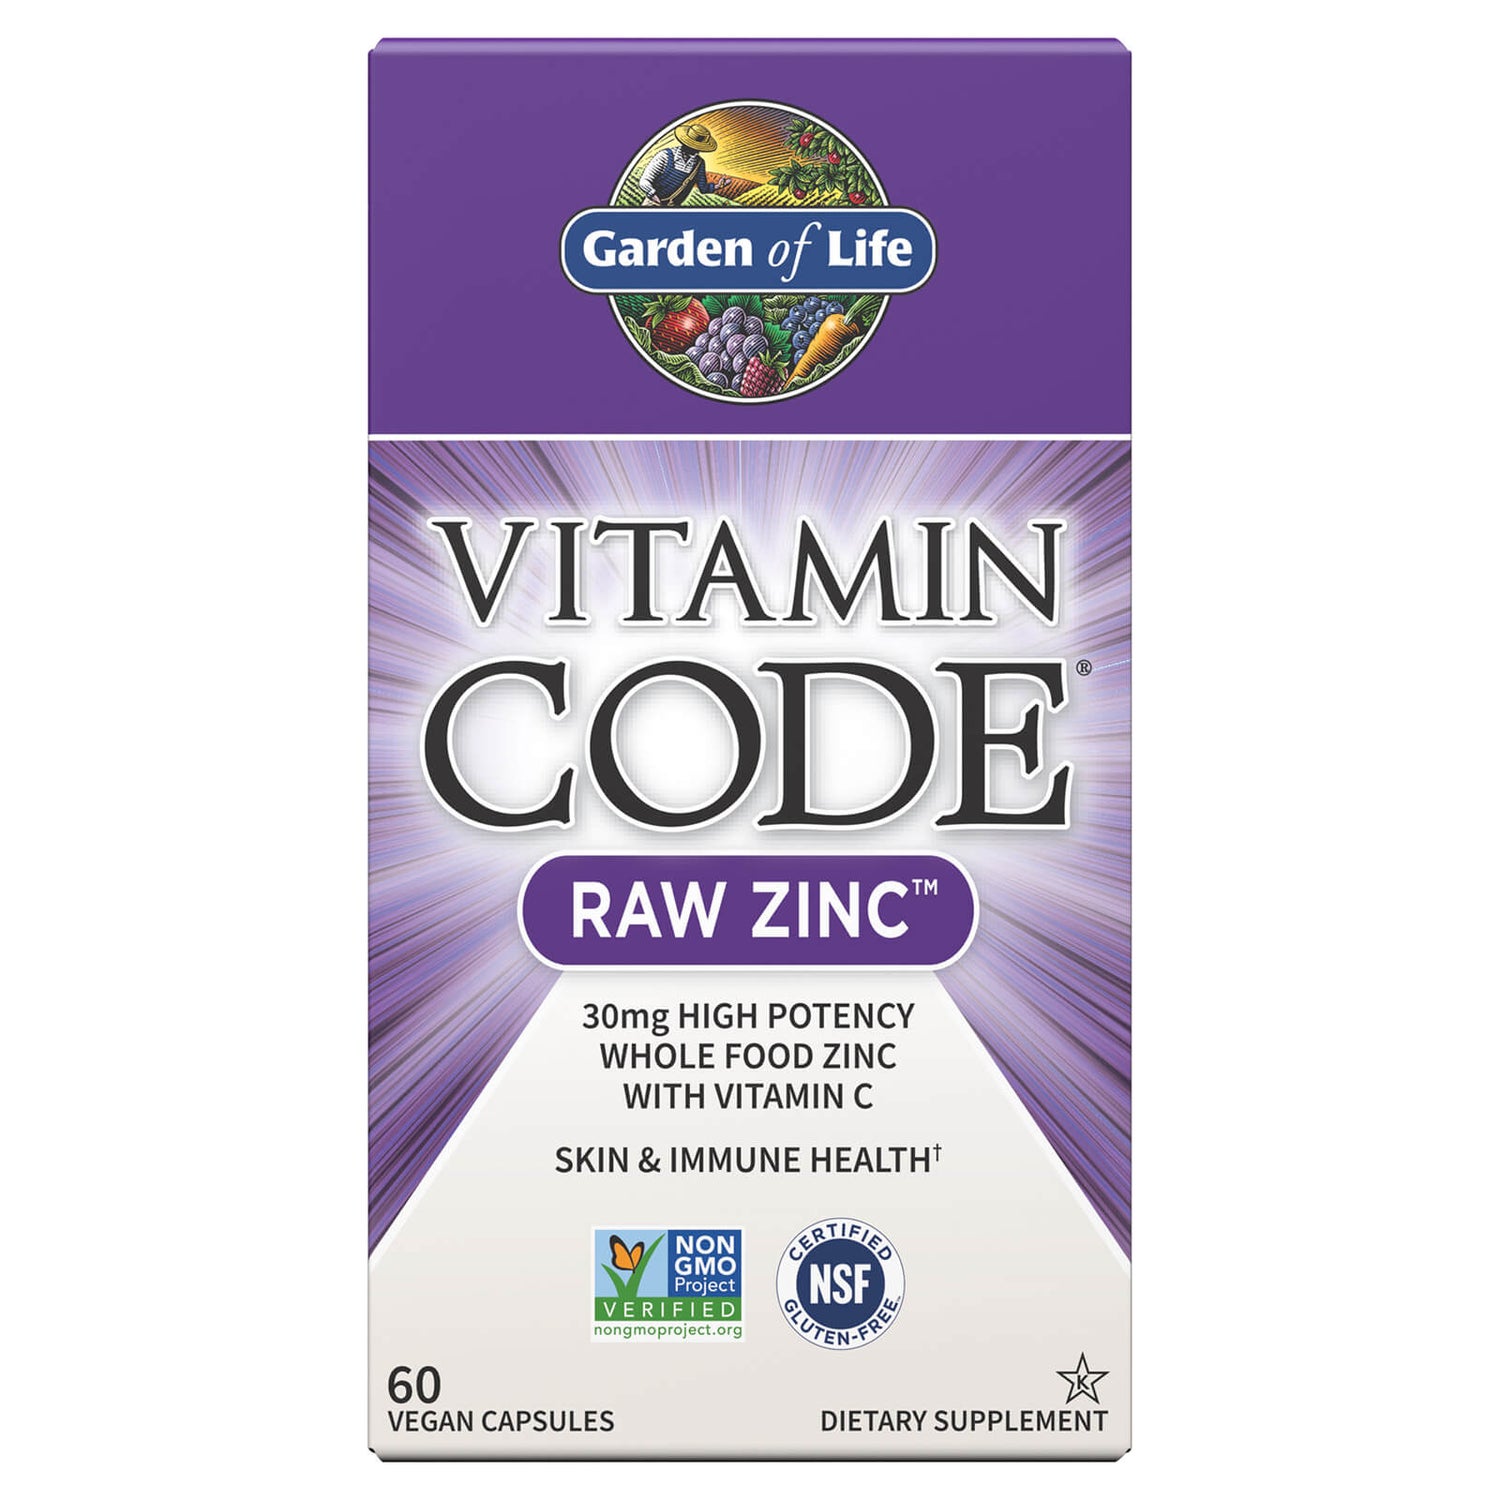 Vitamine Code Raw Zink - 60 Kapseln